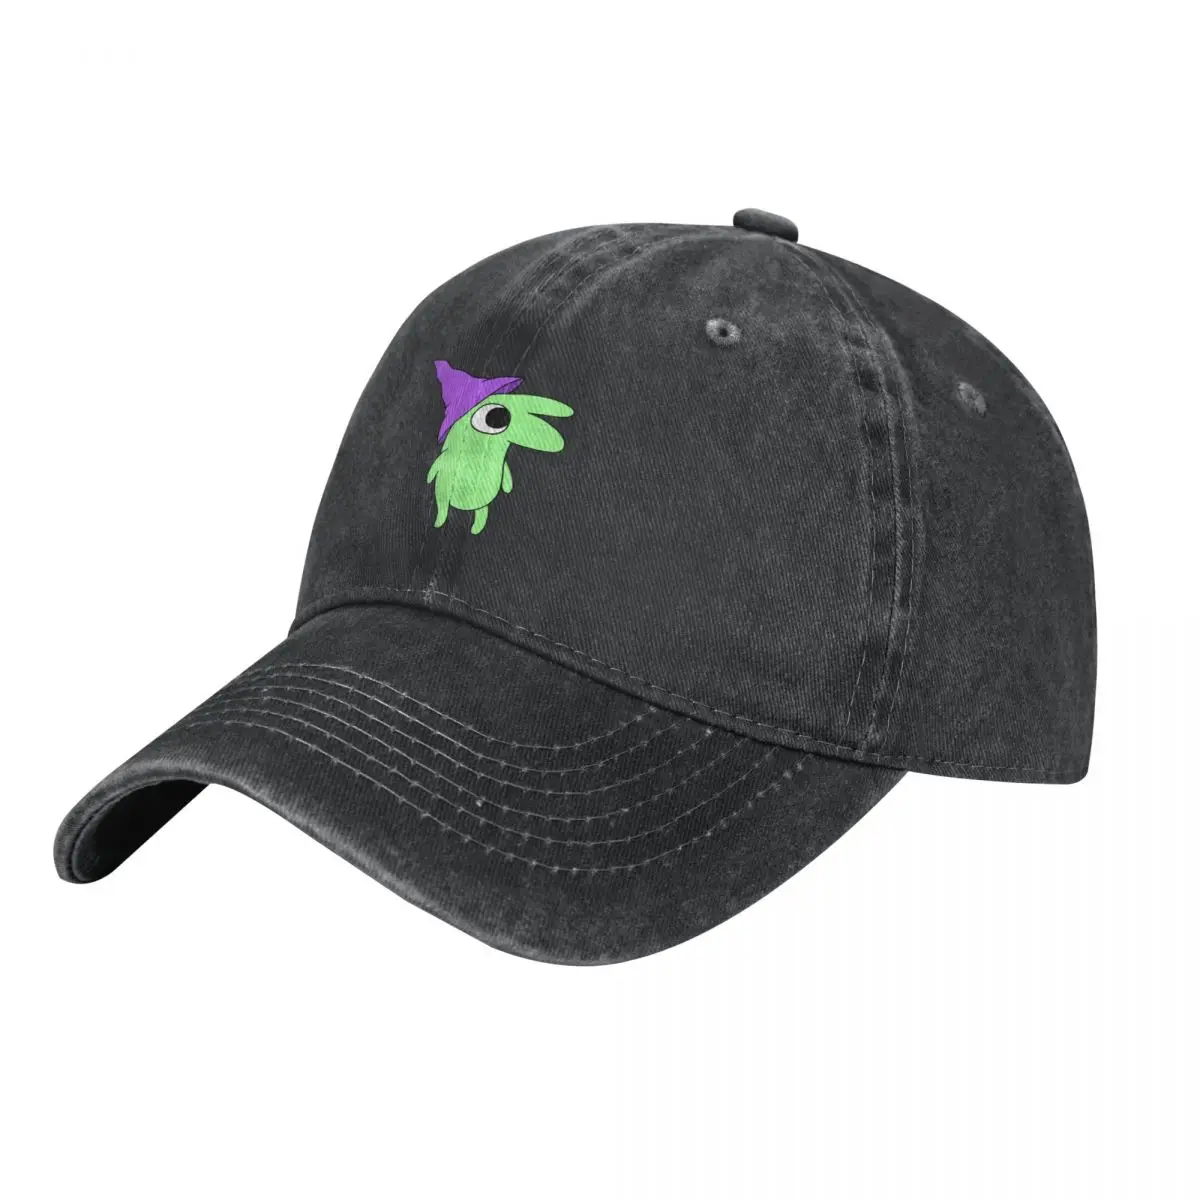 

Glep From Smiling Friends - Adult Swim Cowboy Hat beach hat Custom Cap Women's Hats Men's